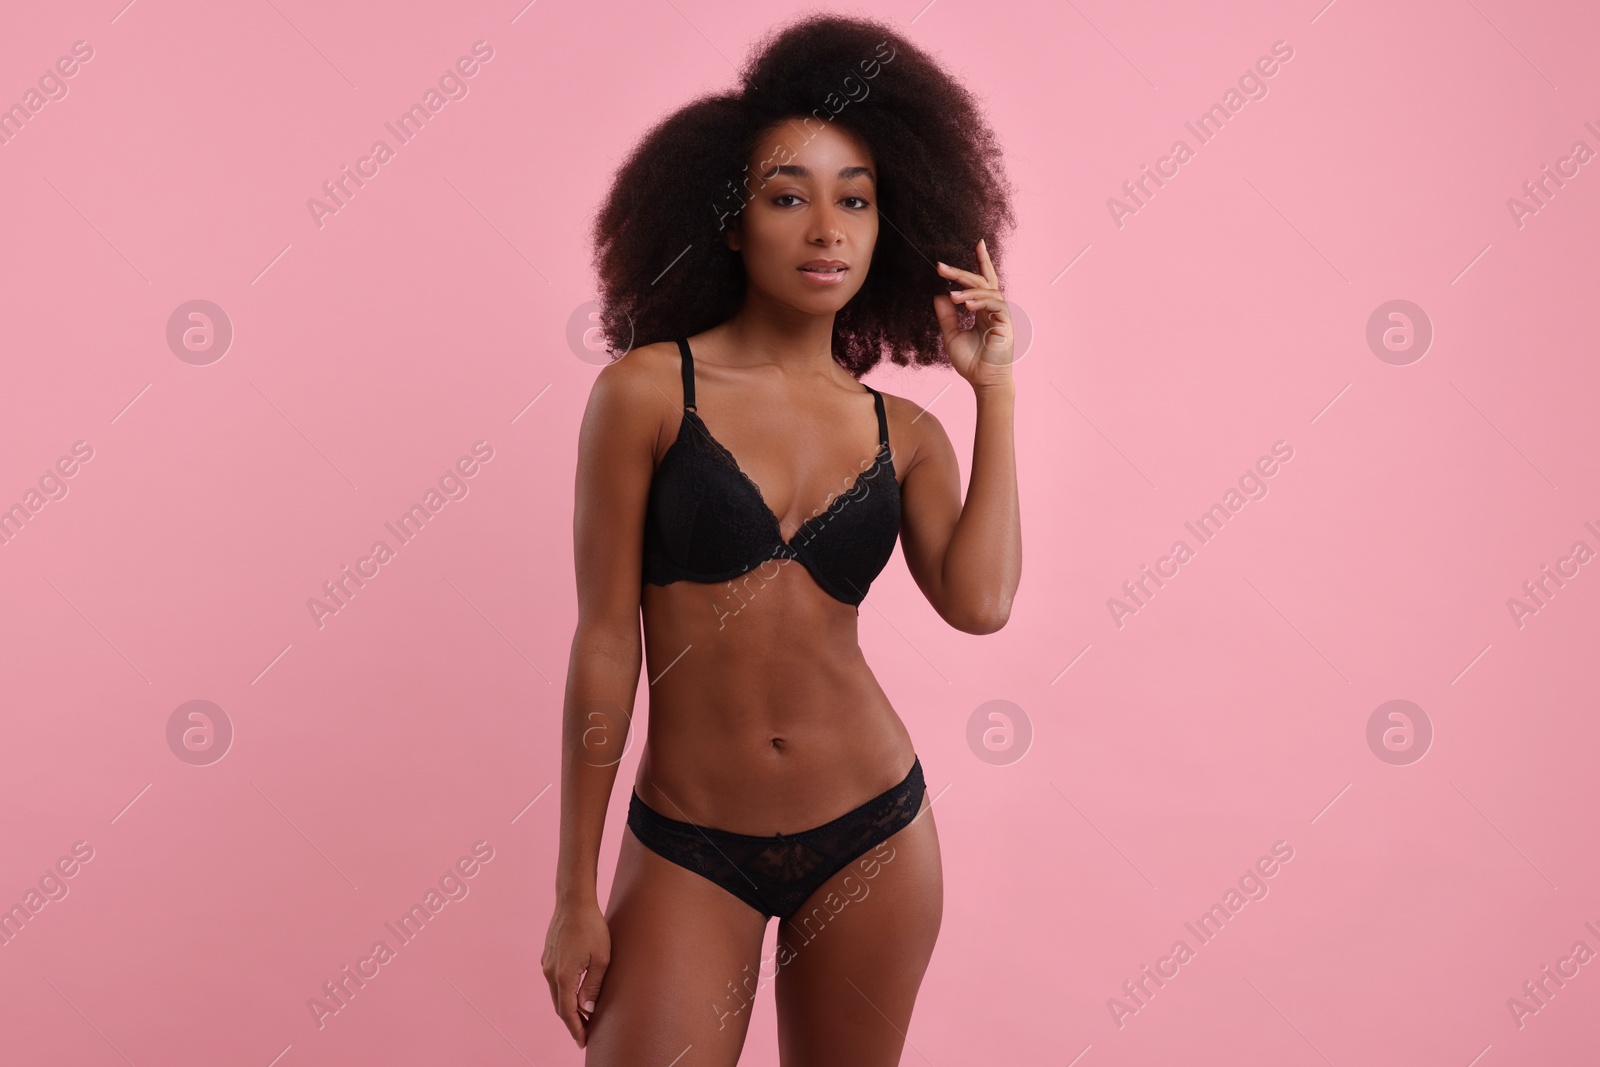 Photo of Beautiful woman in elegant black underwear on pink background